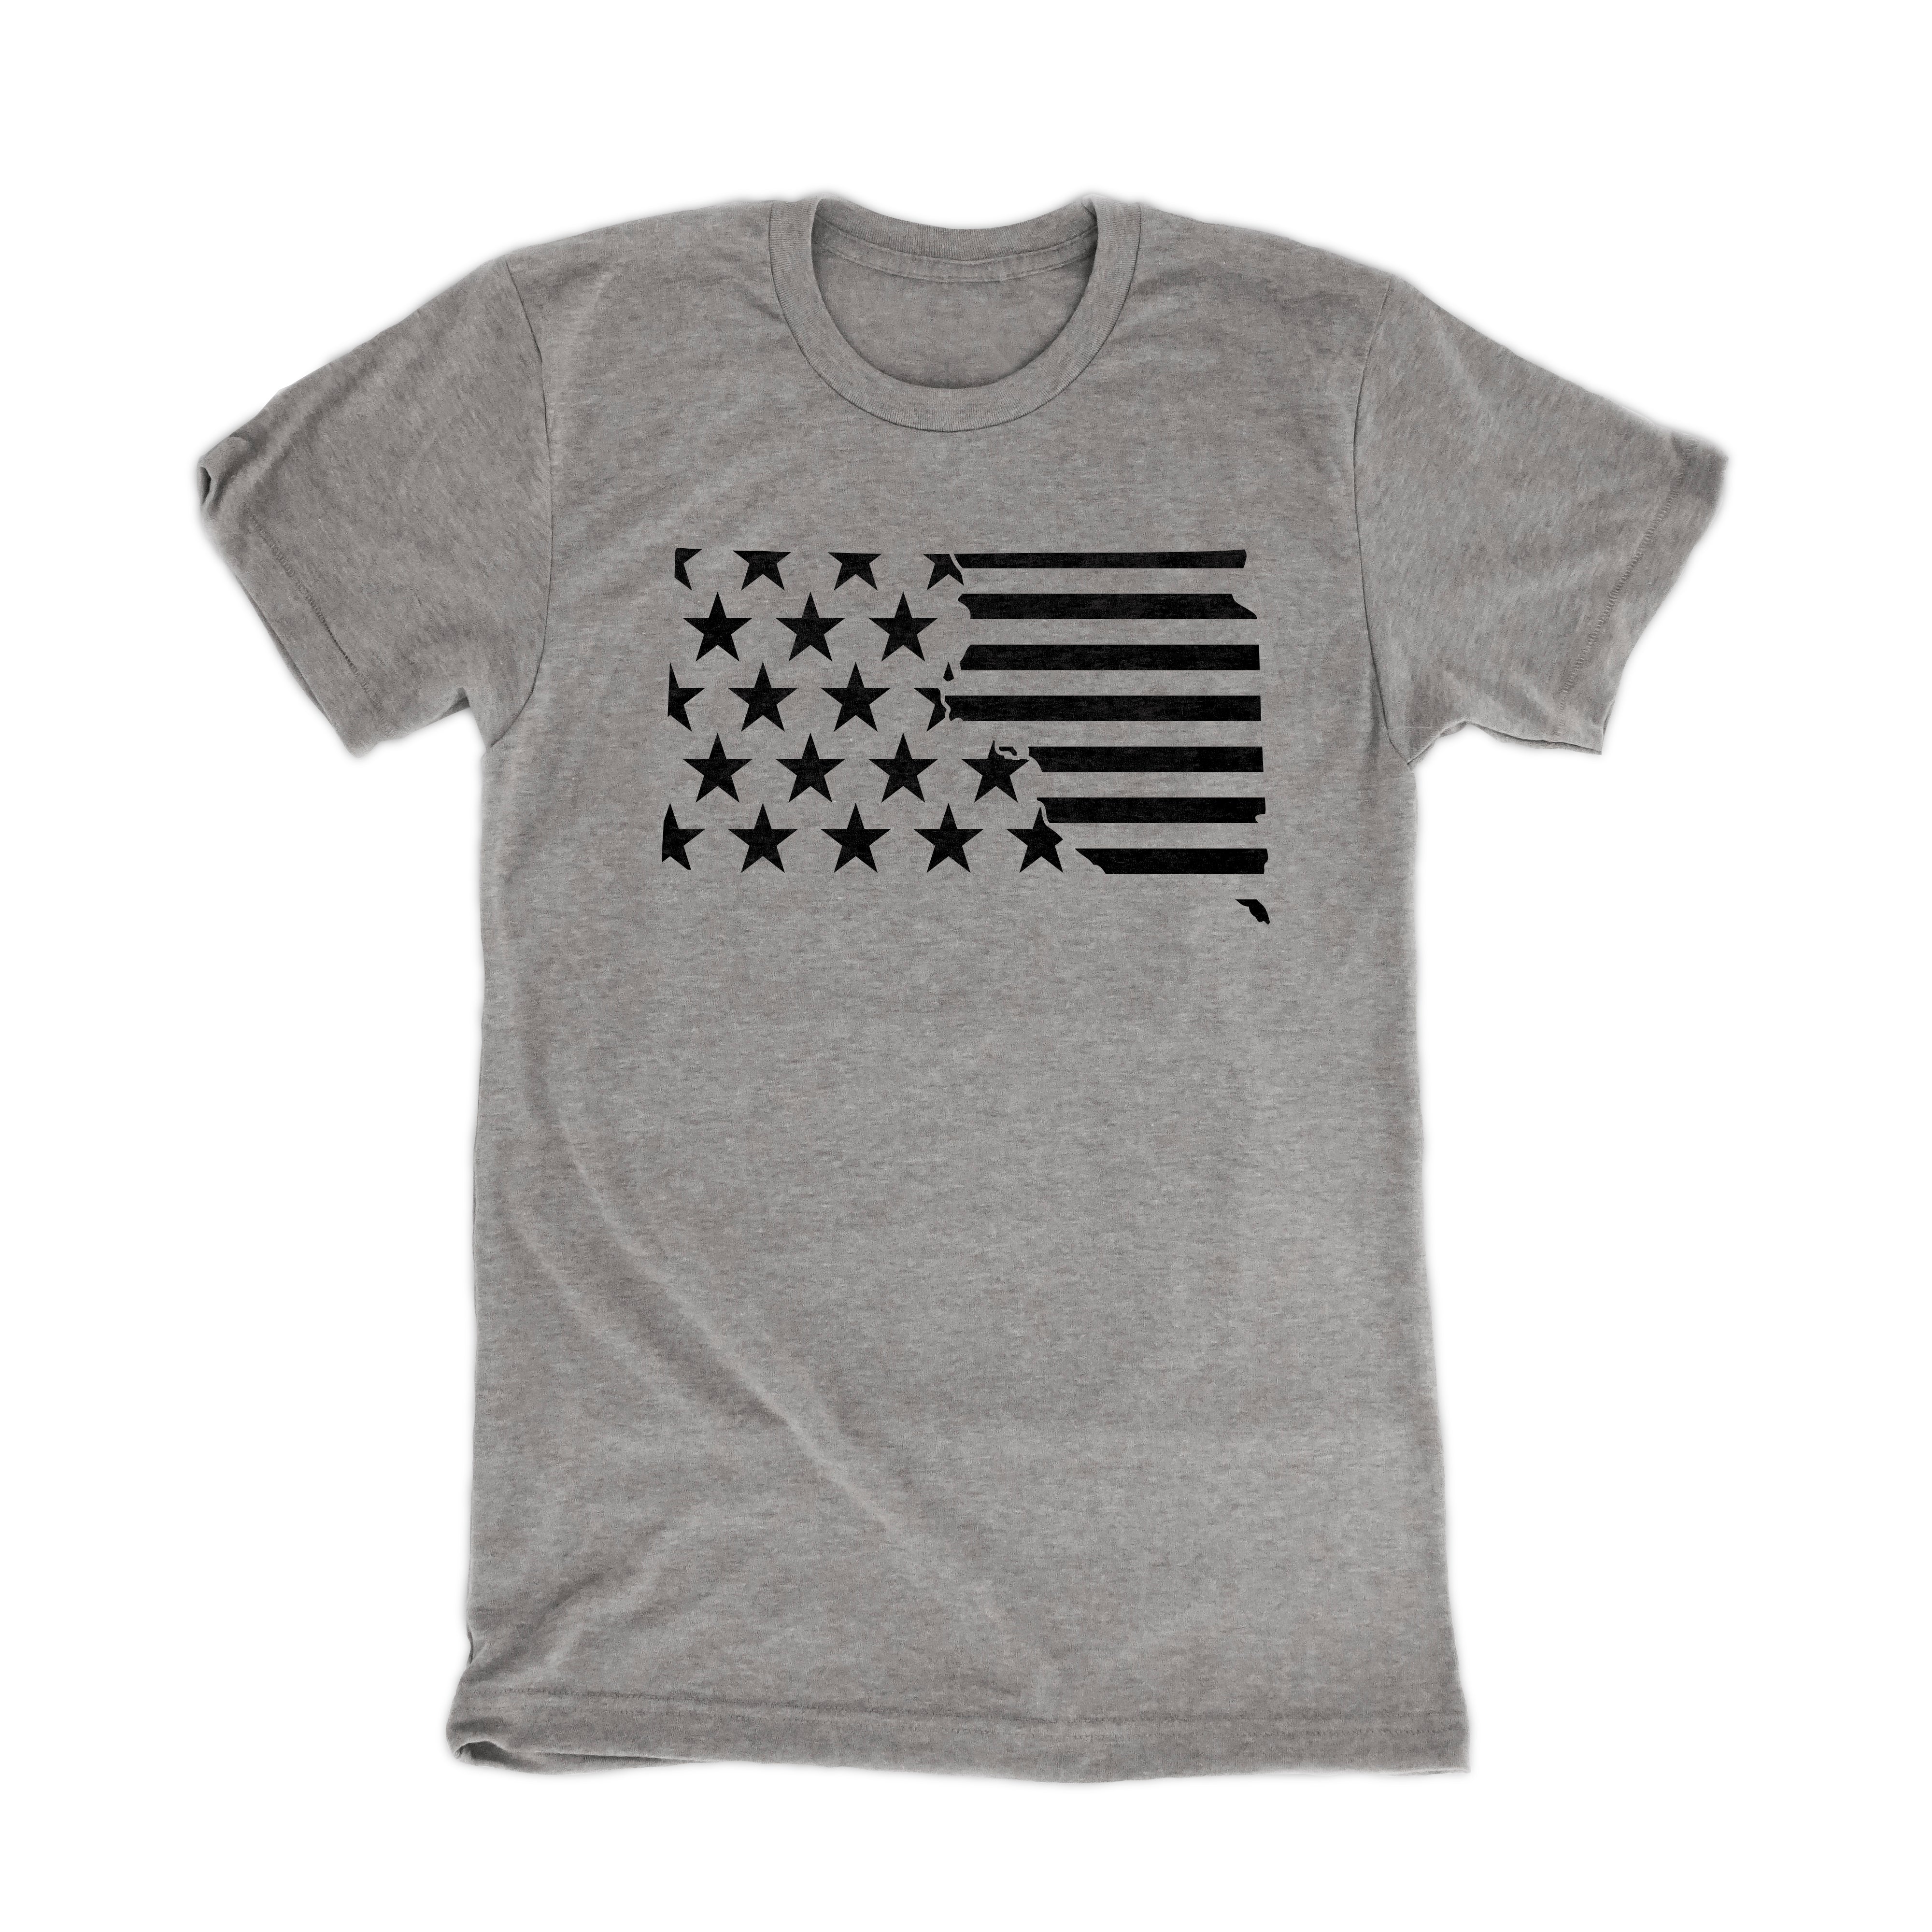 South Dakota Stars and Stripes Gray T-Shirt